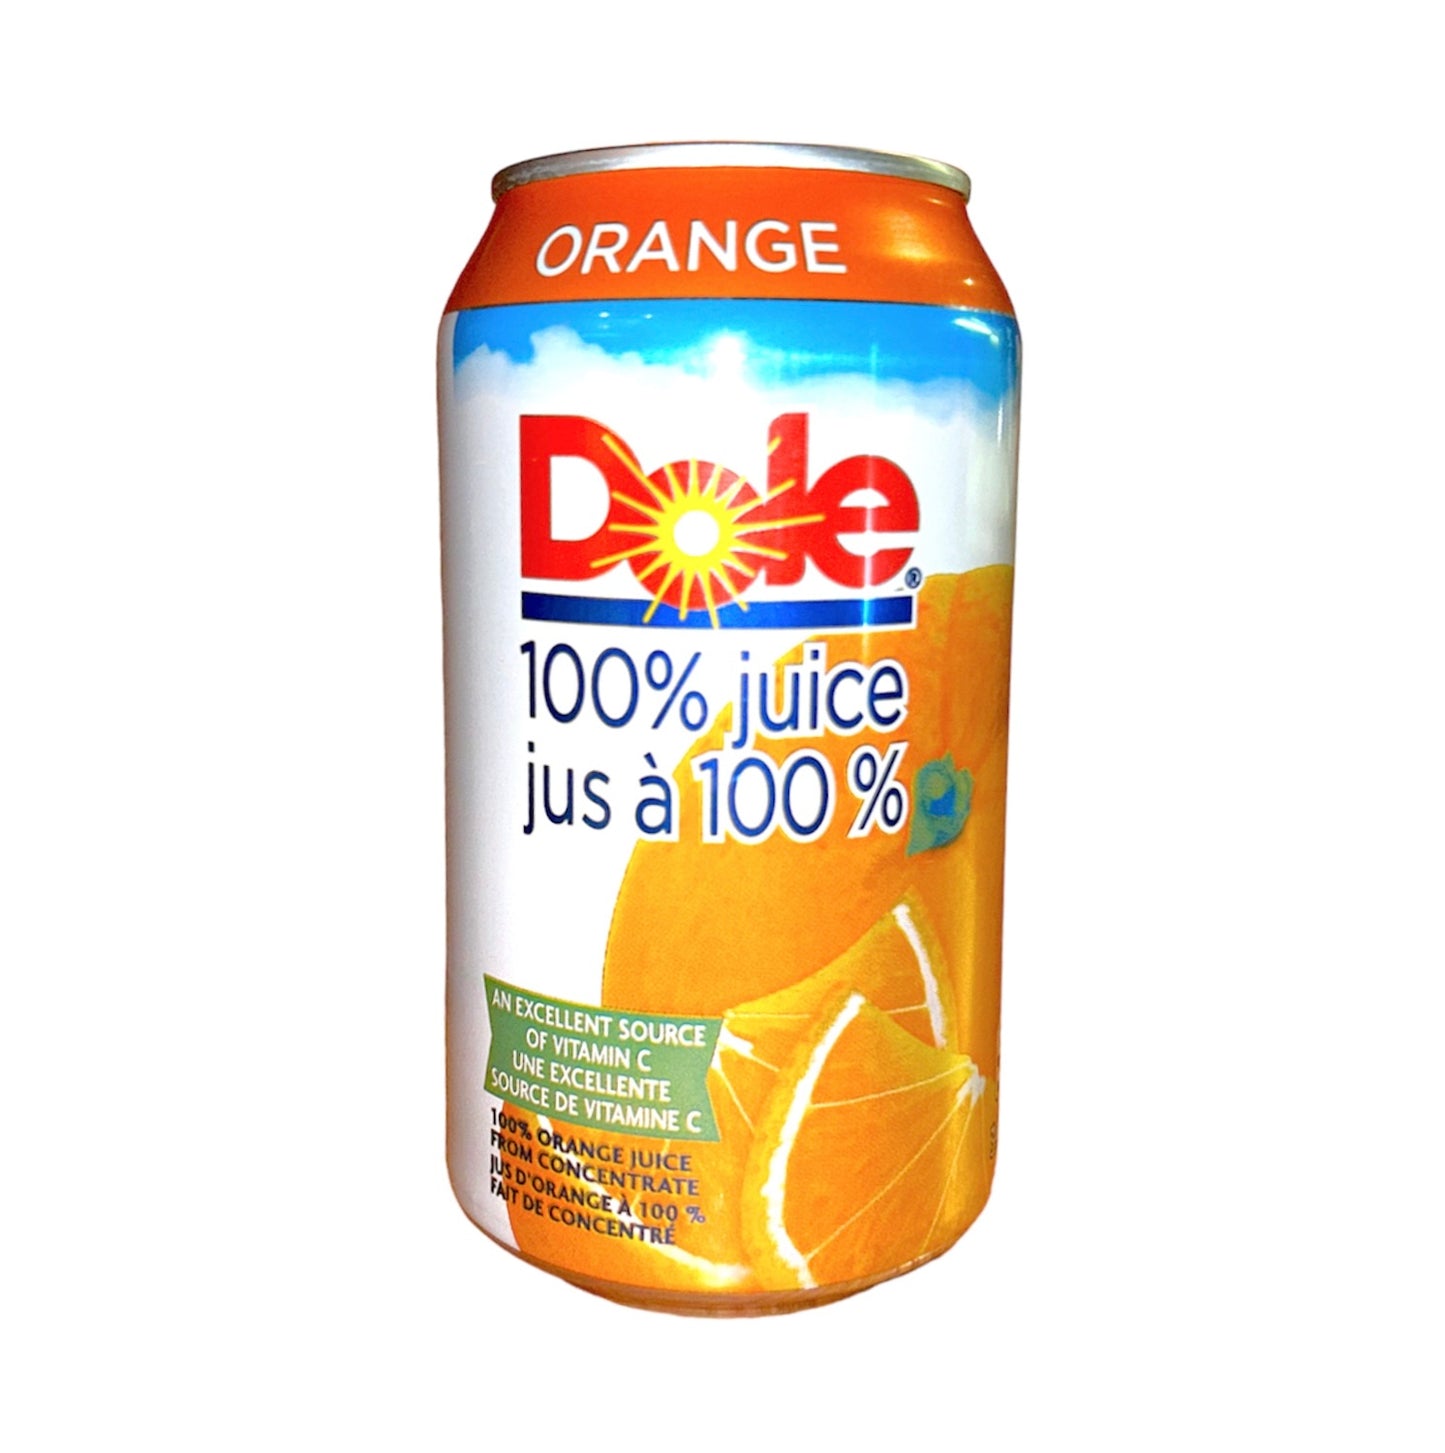 Dole 100% Orange Juice | Suco de Laranja 100% + Bottle Deposit